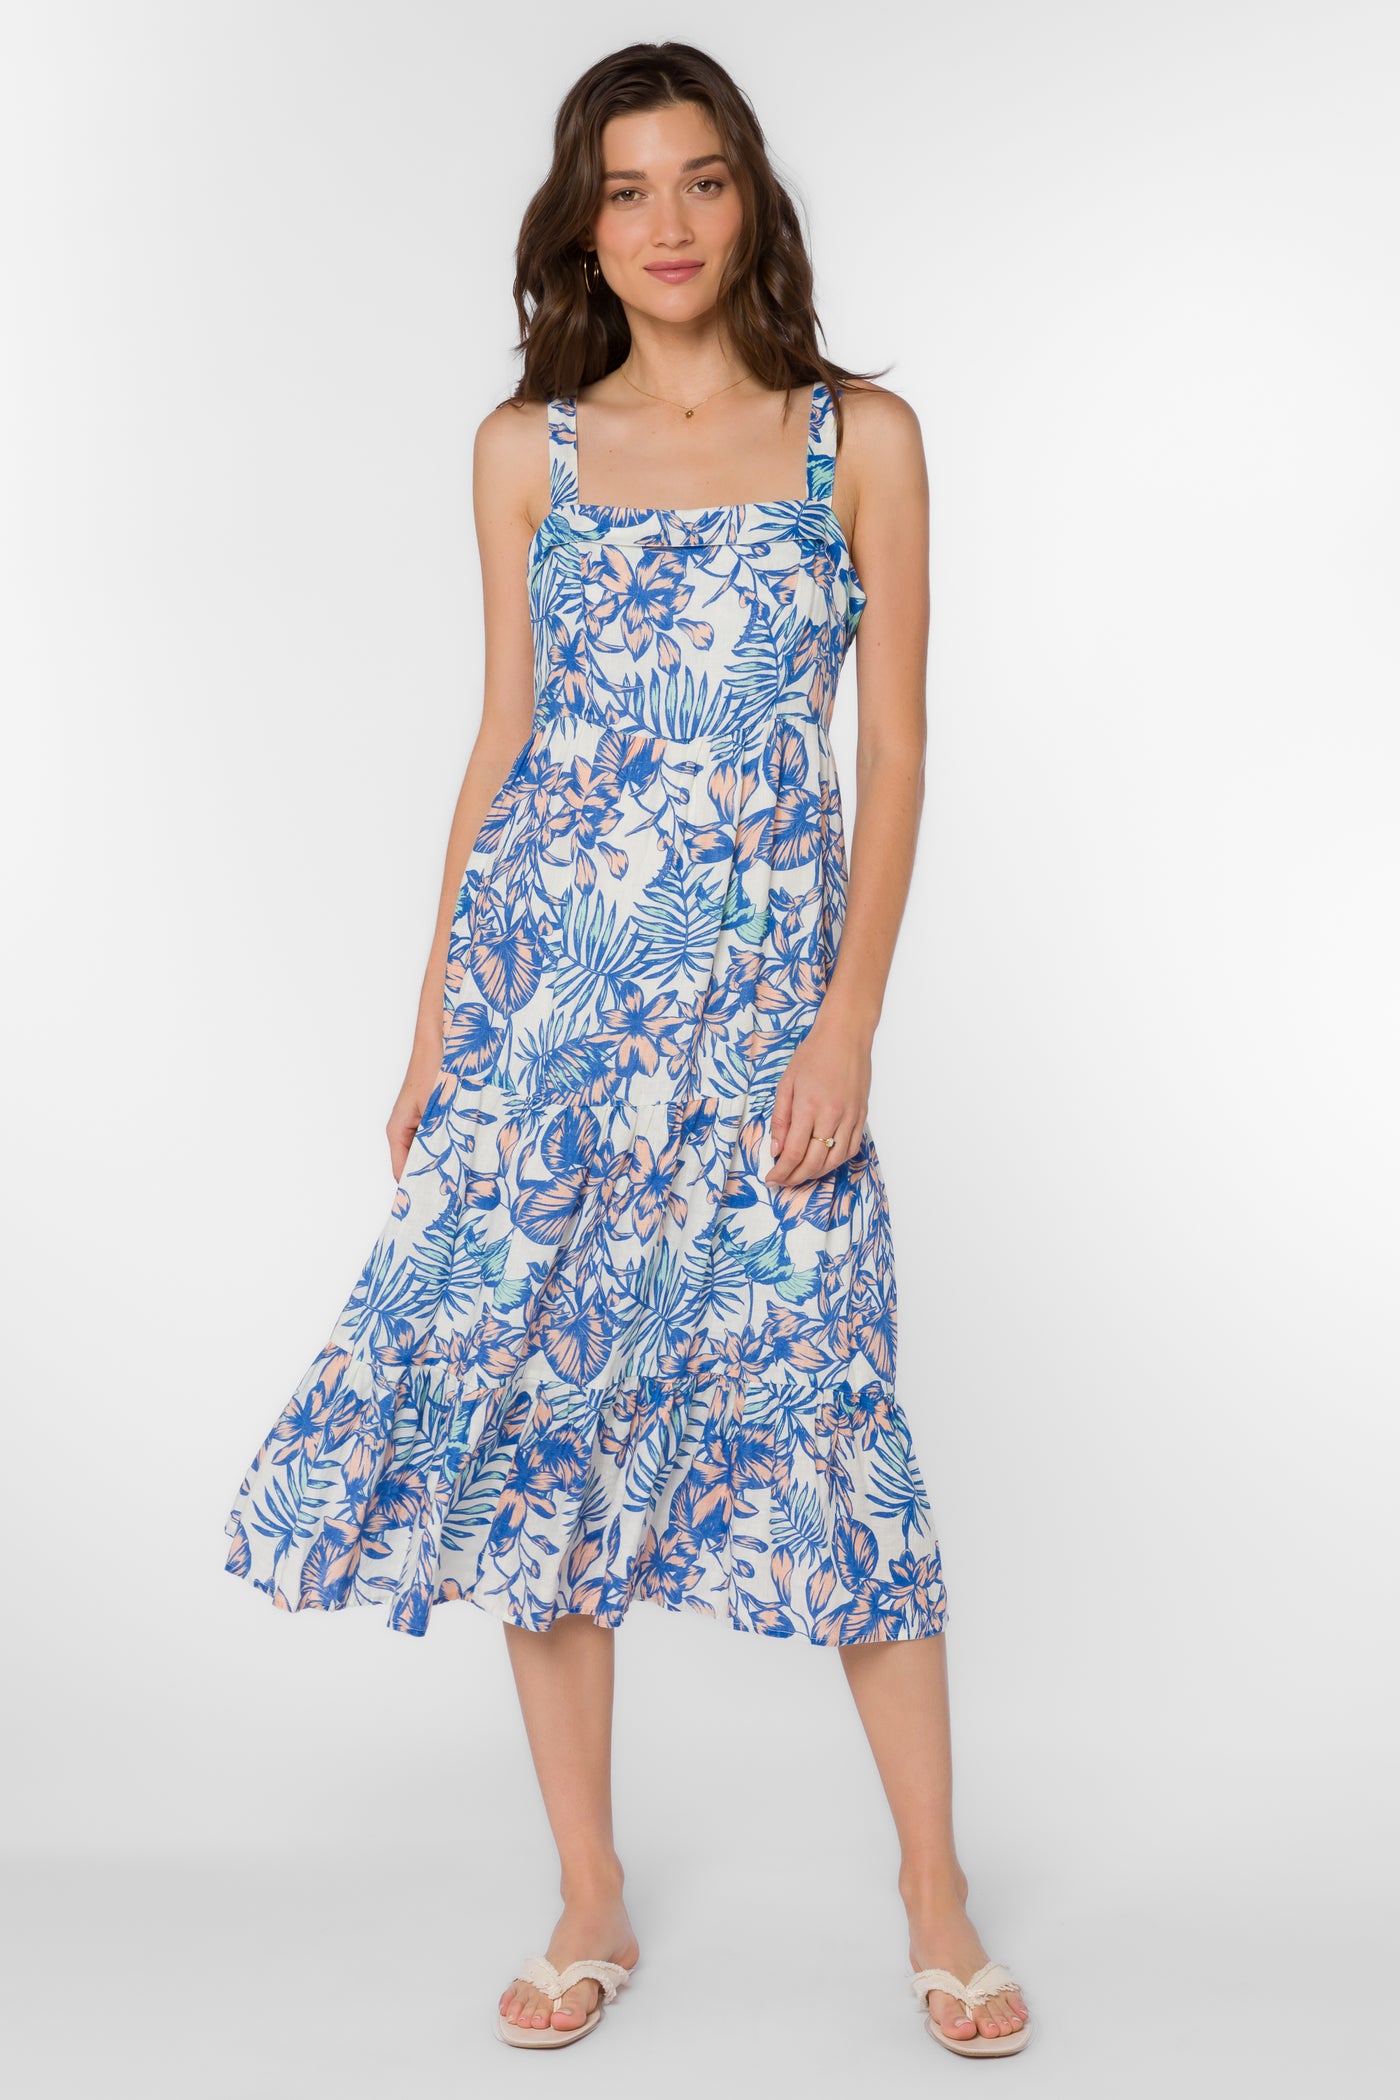 Diana Blue Tropicana Dress - Dresses - Velvet Heart Clothing